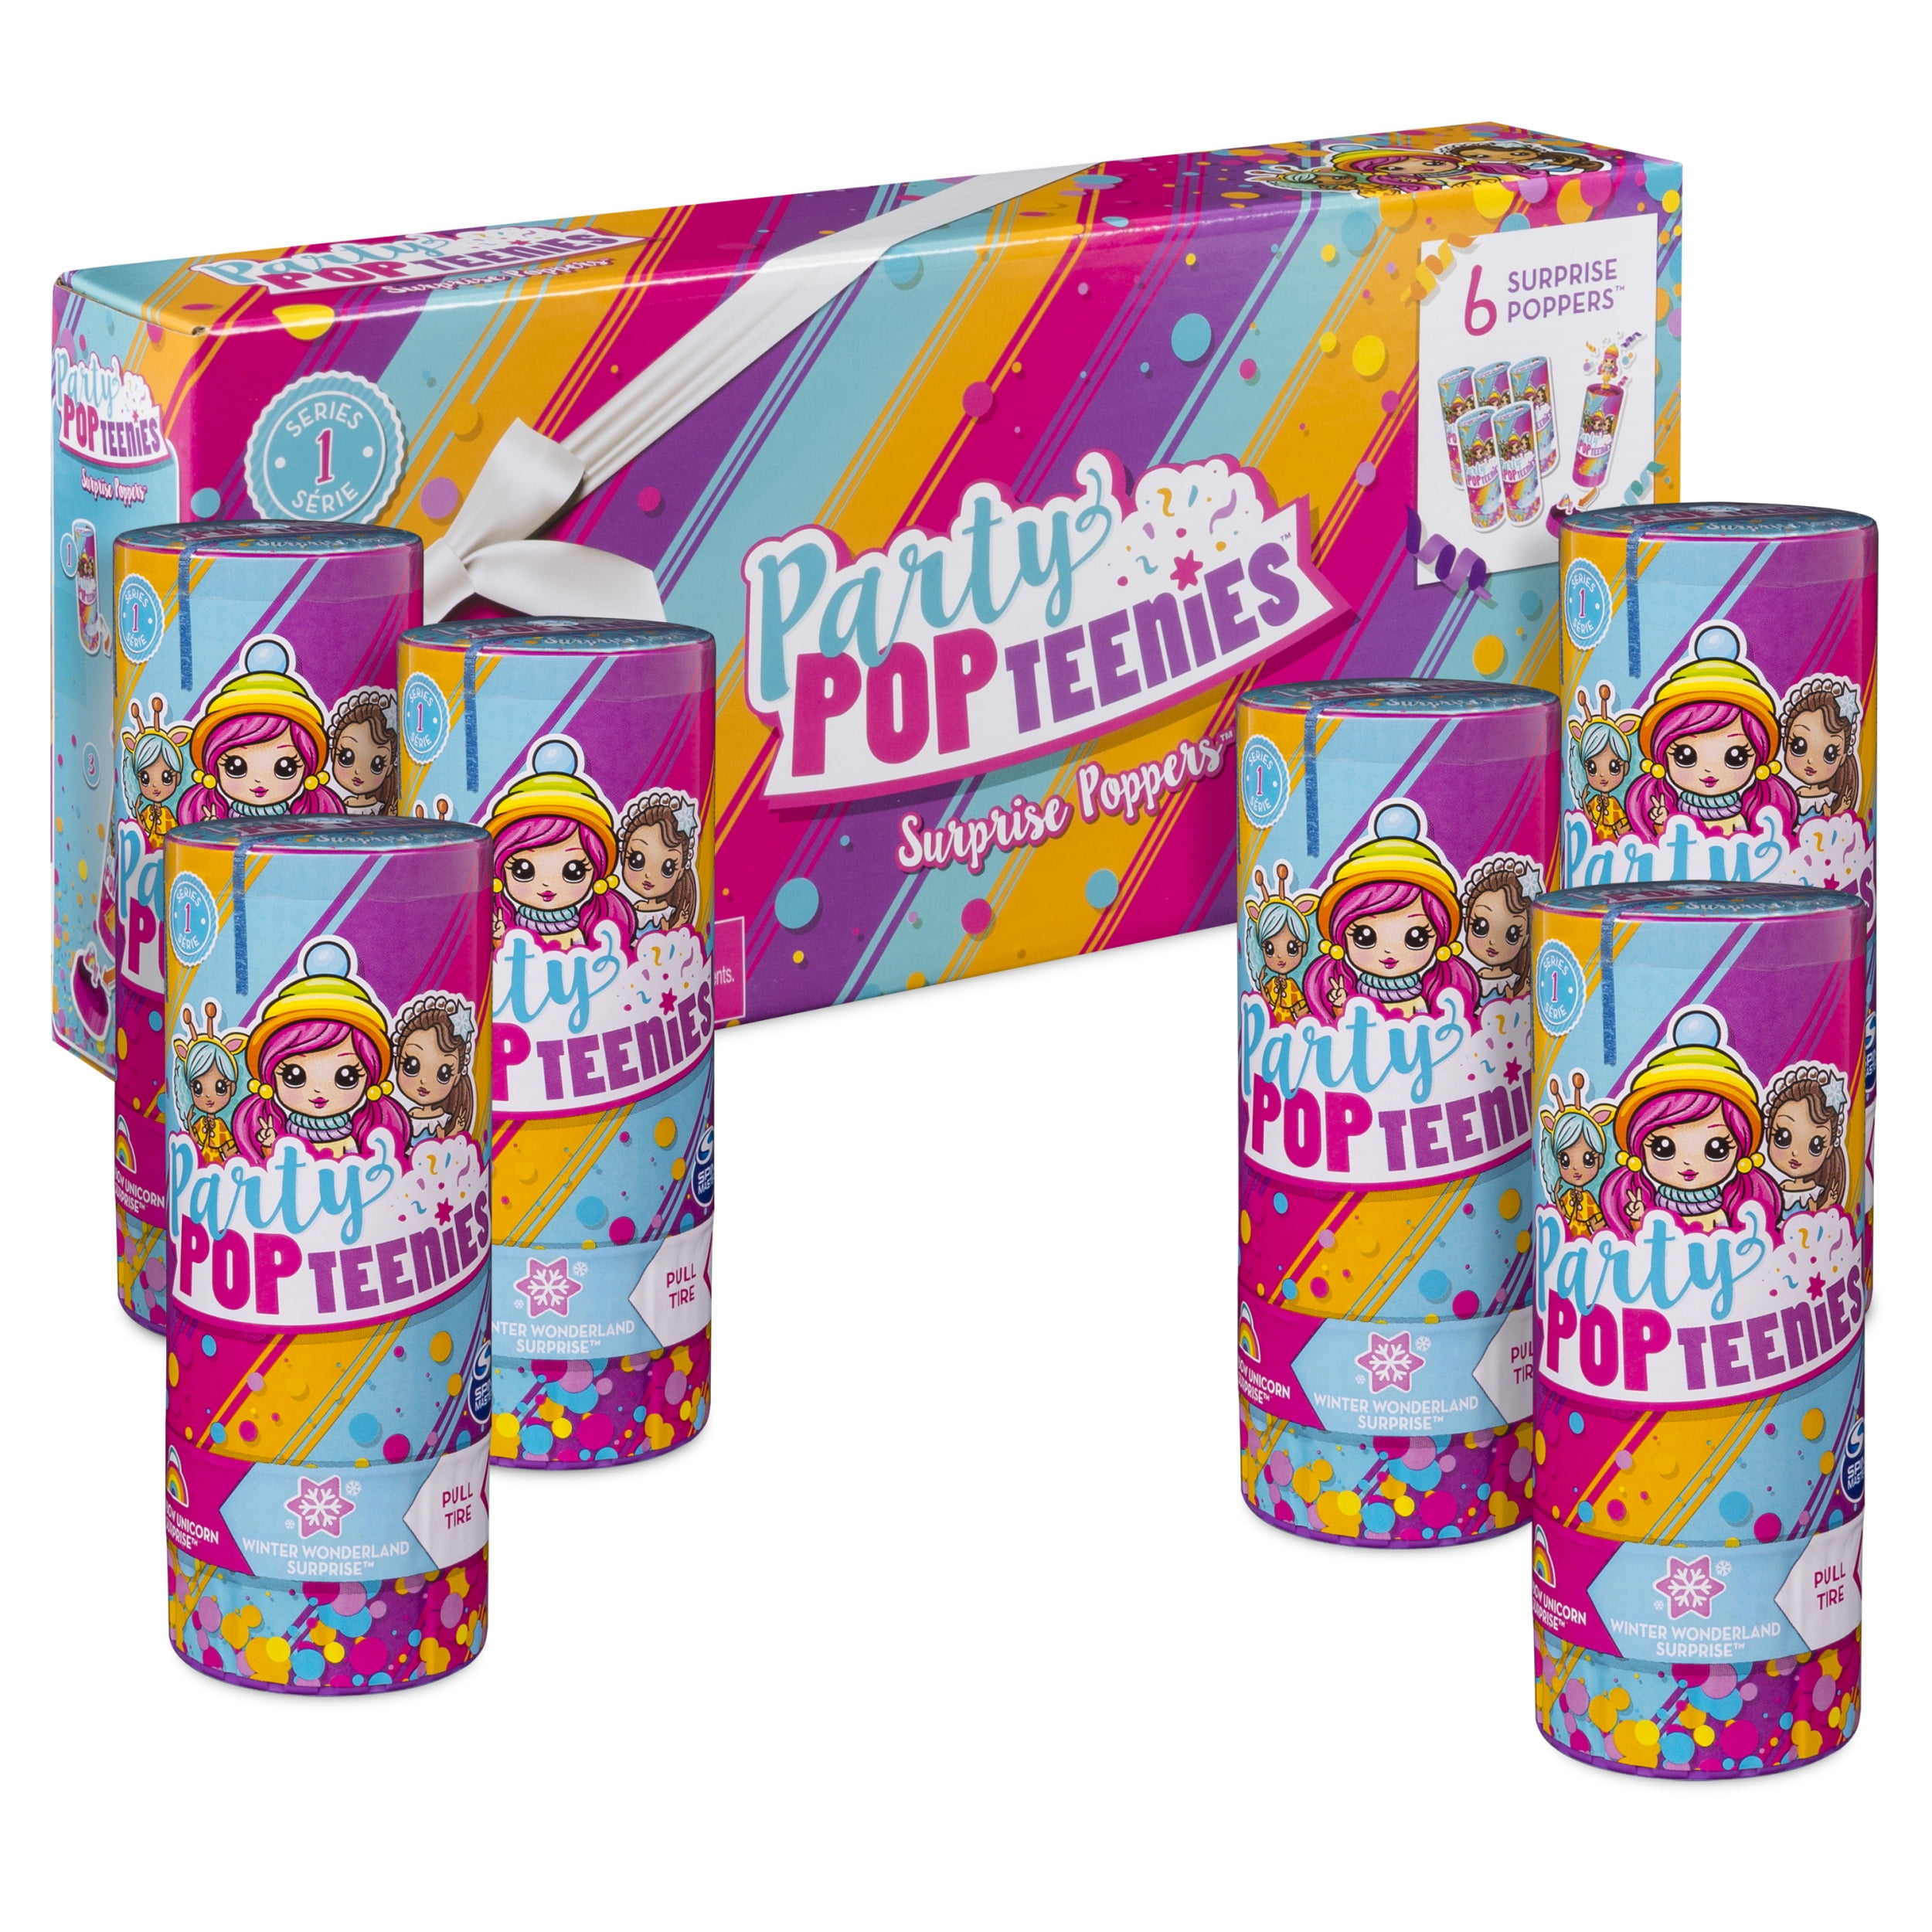 2x Party Pop Teenies Surprise Popper Doll Confetti Teenie Series 1 Popteenies for sale online 